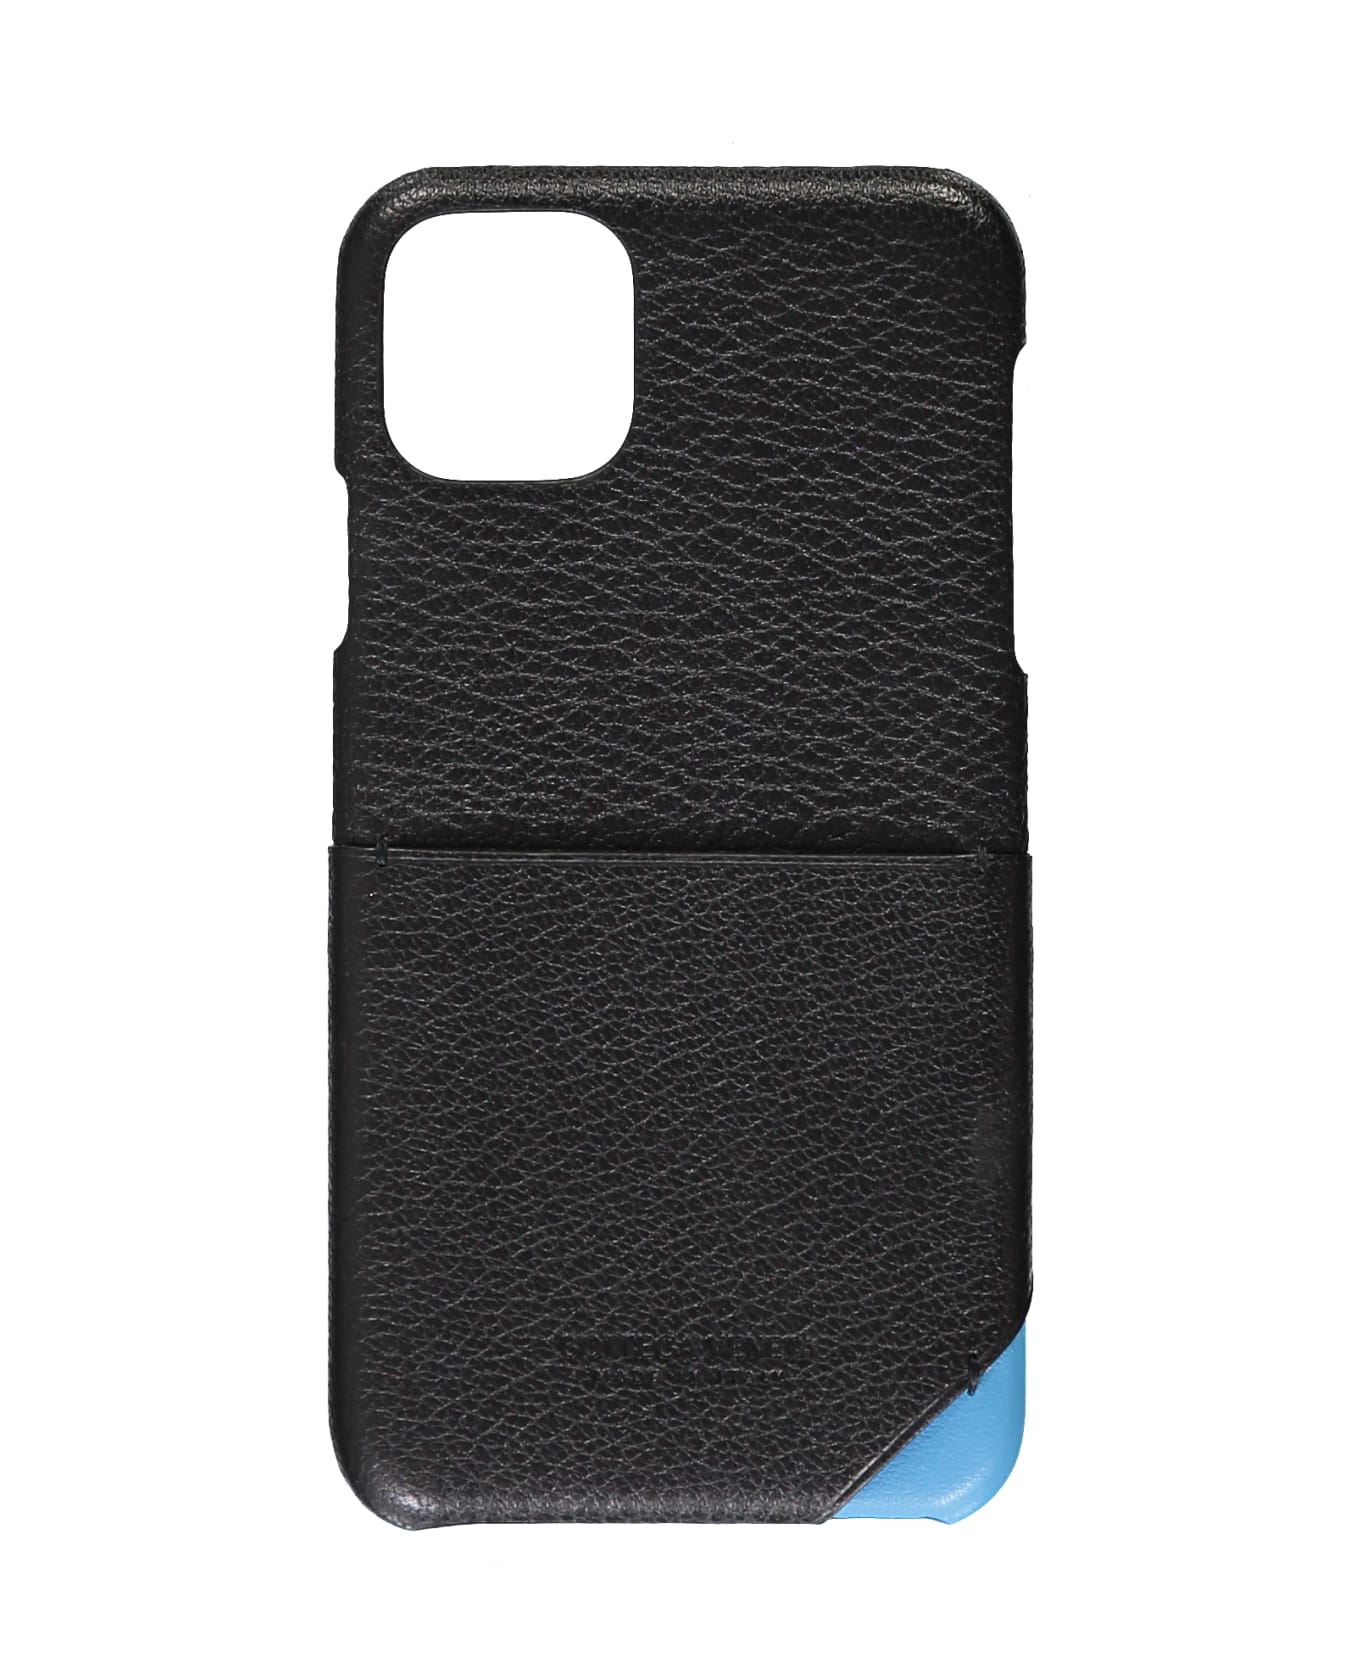 Bottega Veneta Iphone Case Xi Pro - black デジタルアクセサリー